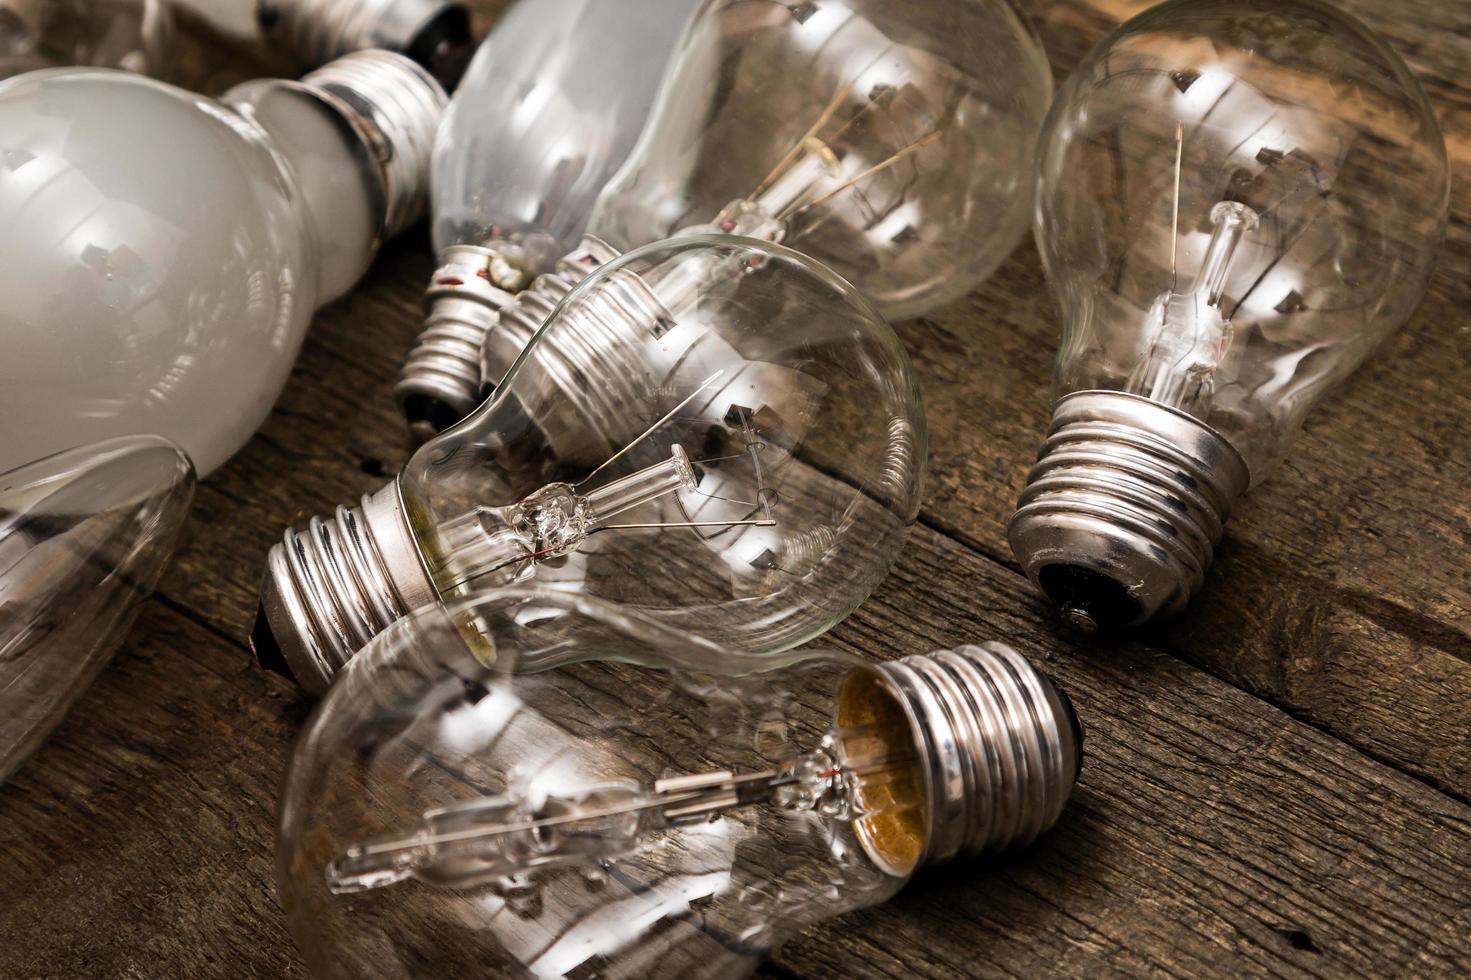 Lightbulbs on wooden background photo